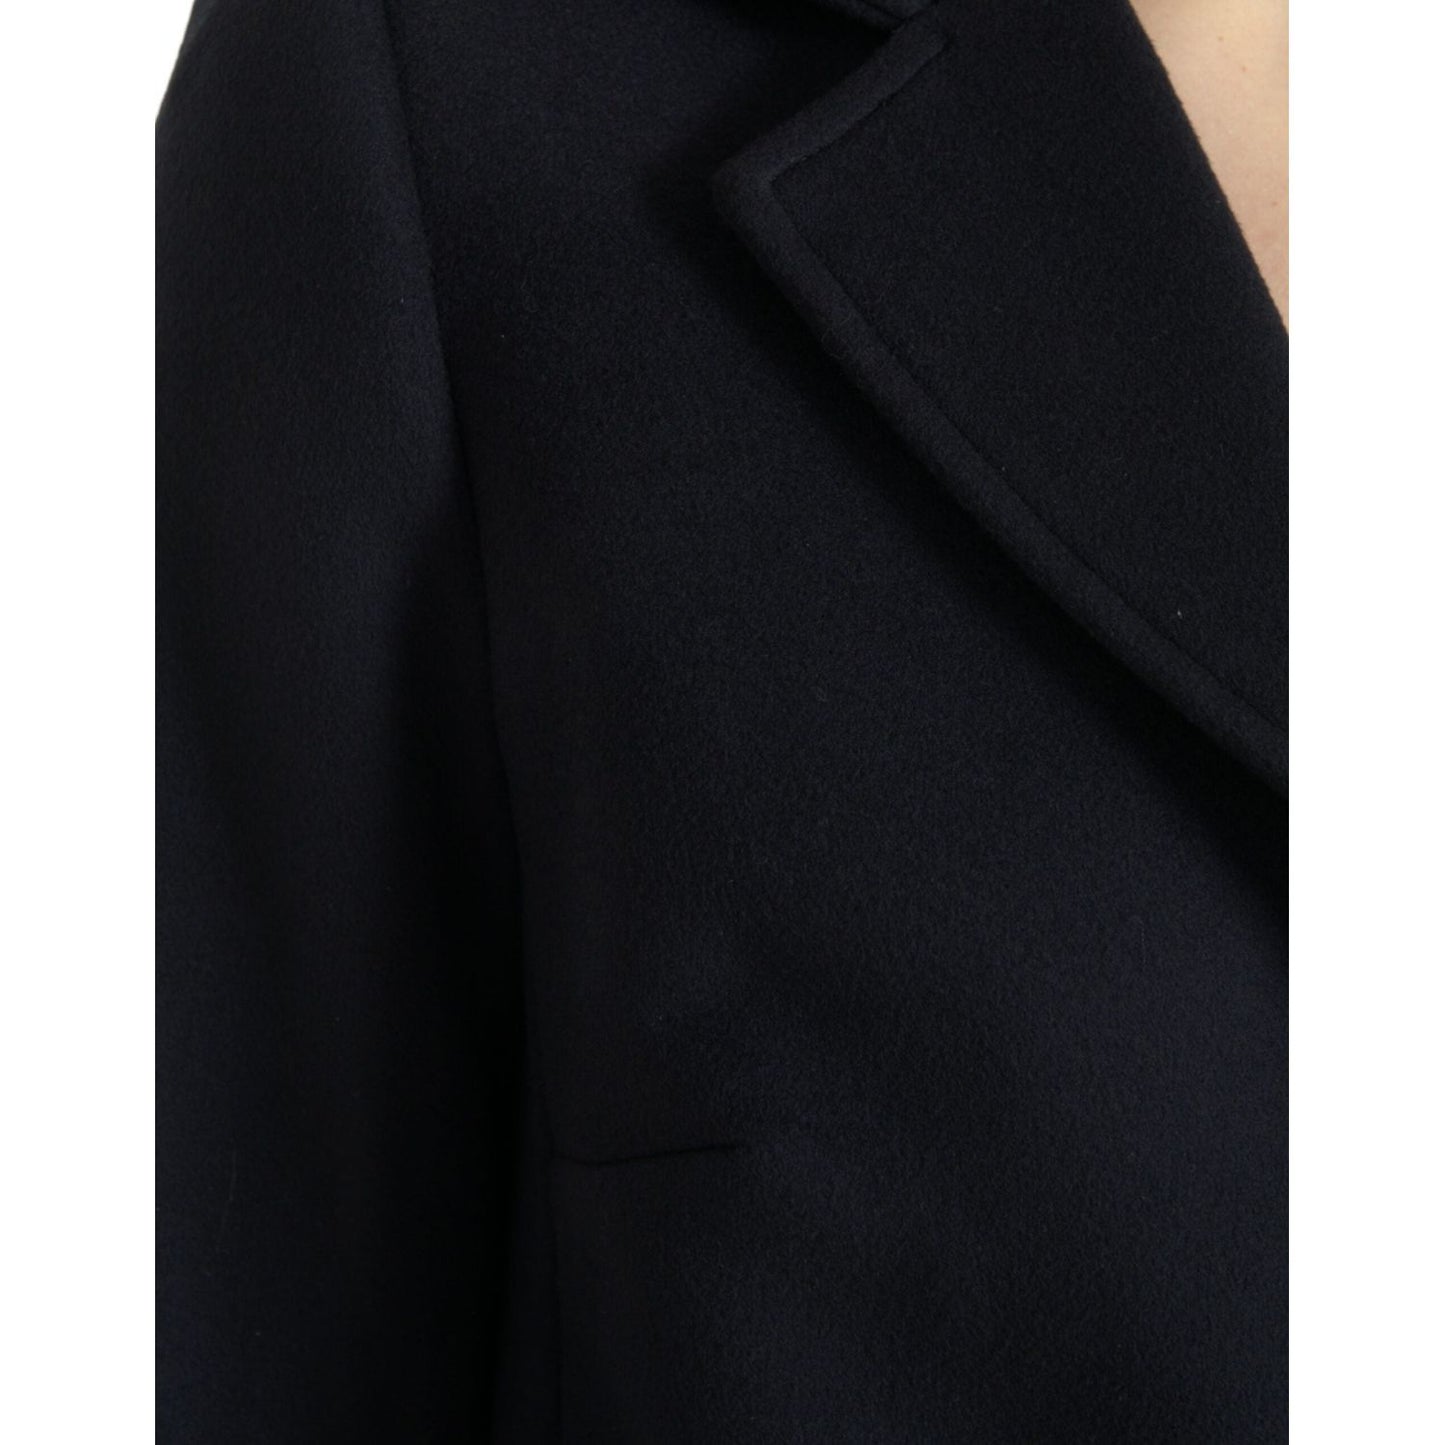 Dolce & Gabbana Elegant Virgin Wool Blend Black Blazer elegant-virgin-wool-blend-black-blazer